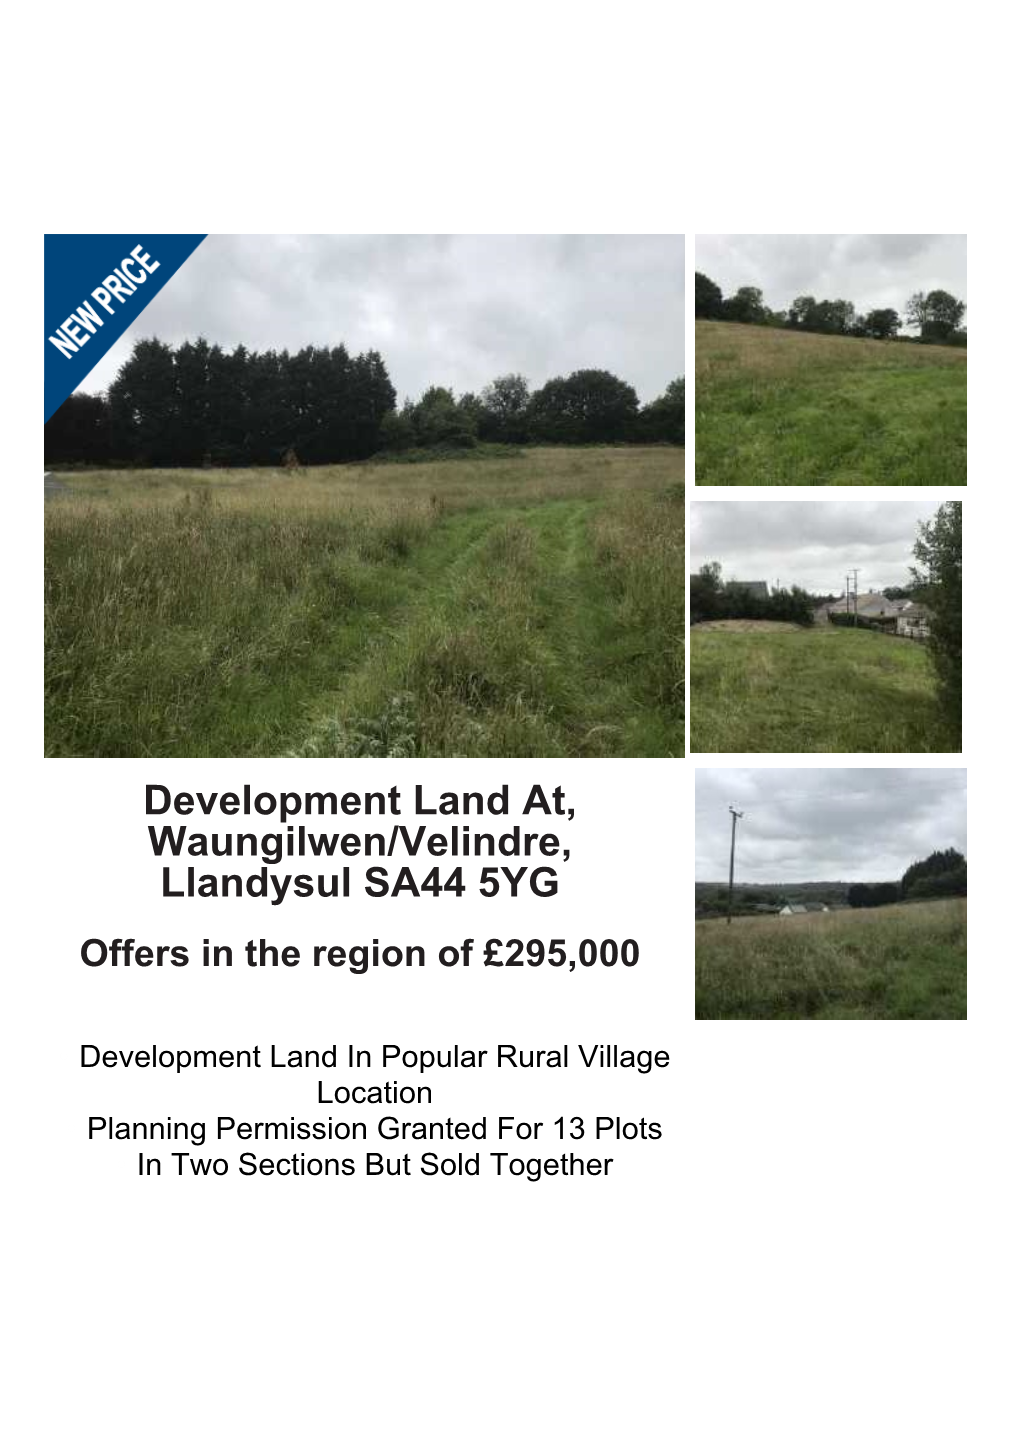 Development Land At, Waungilwen/Velindre, Llandysul SA44 5YG Offers in the Region of £295,000